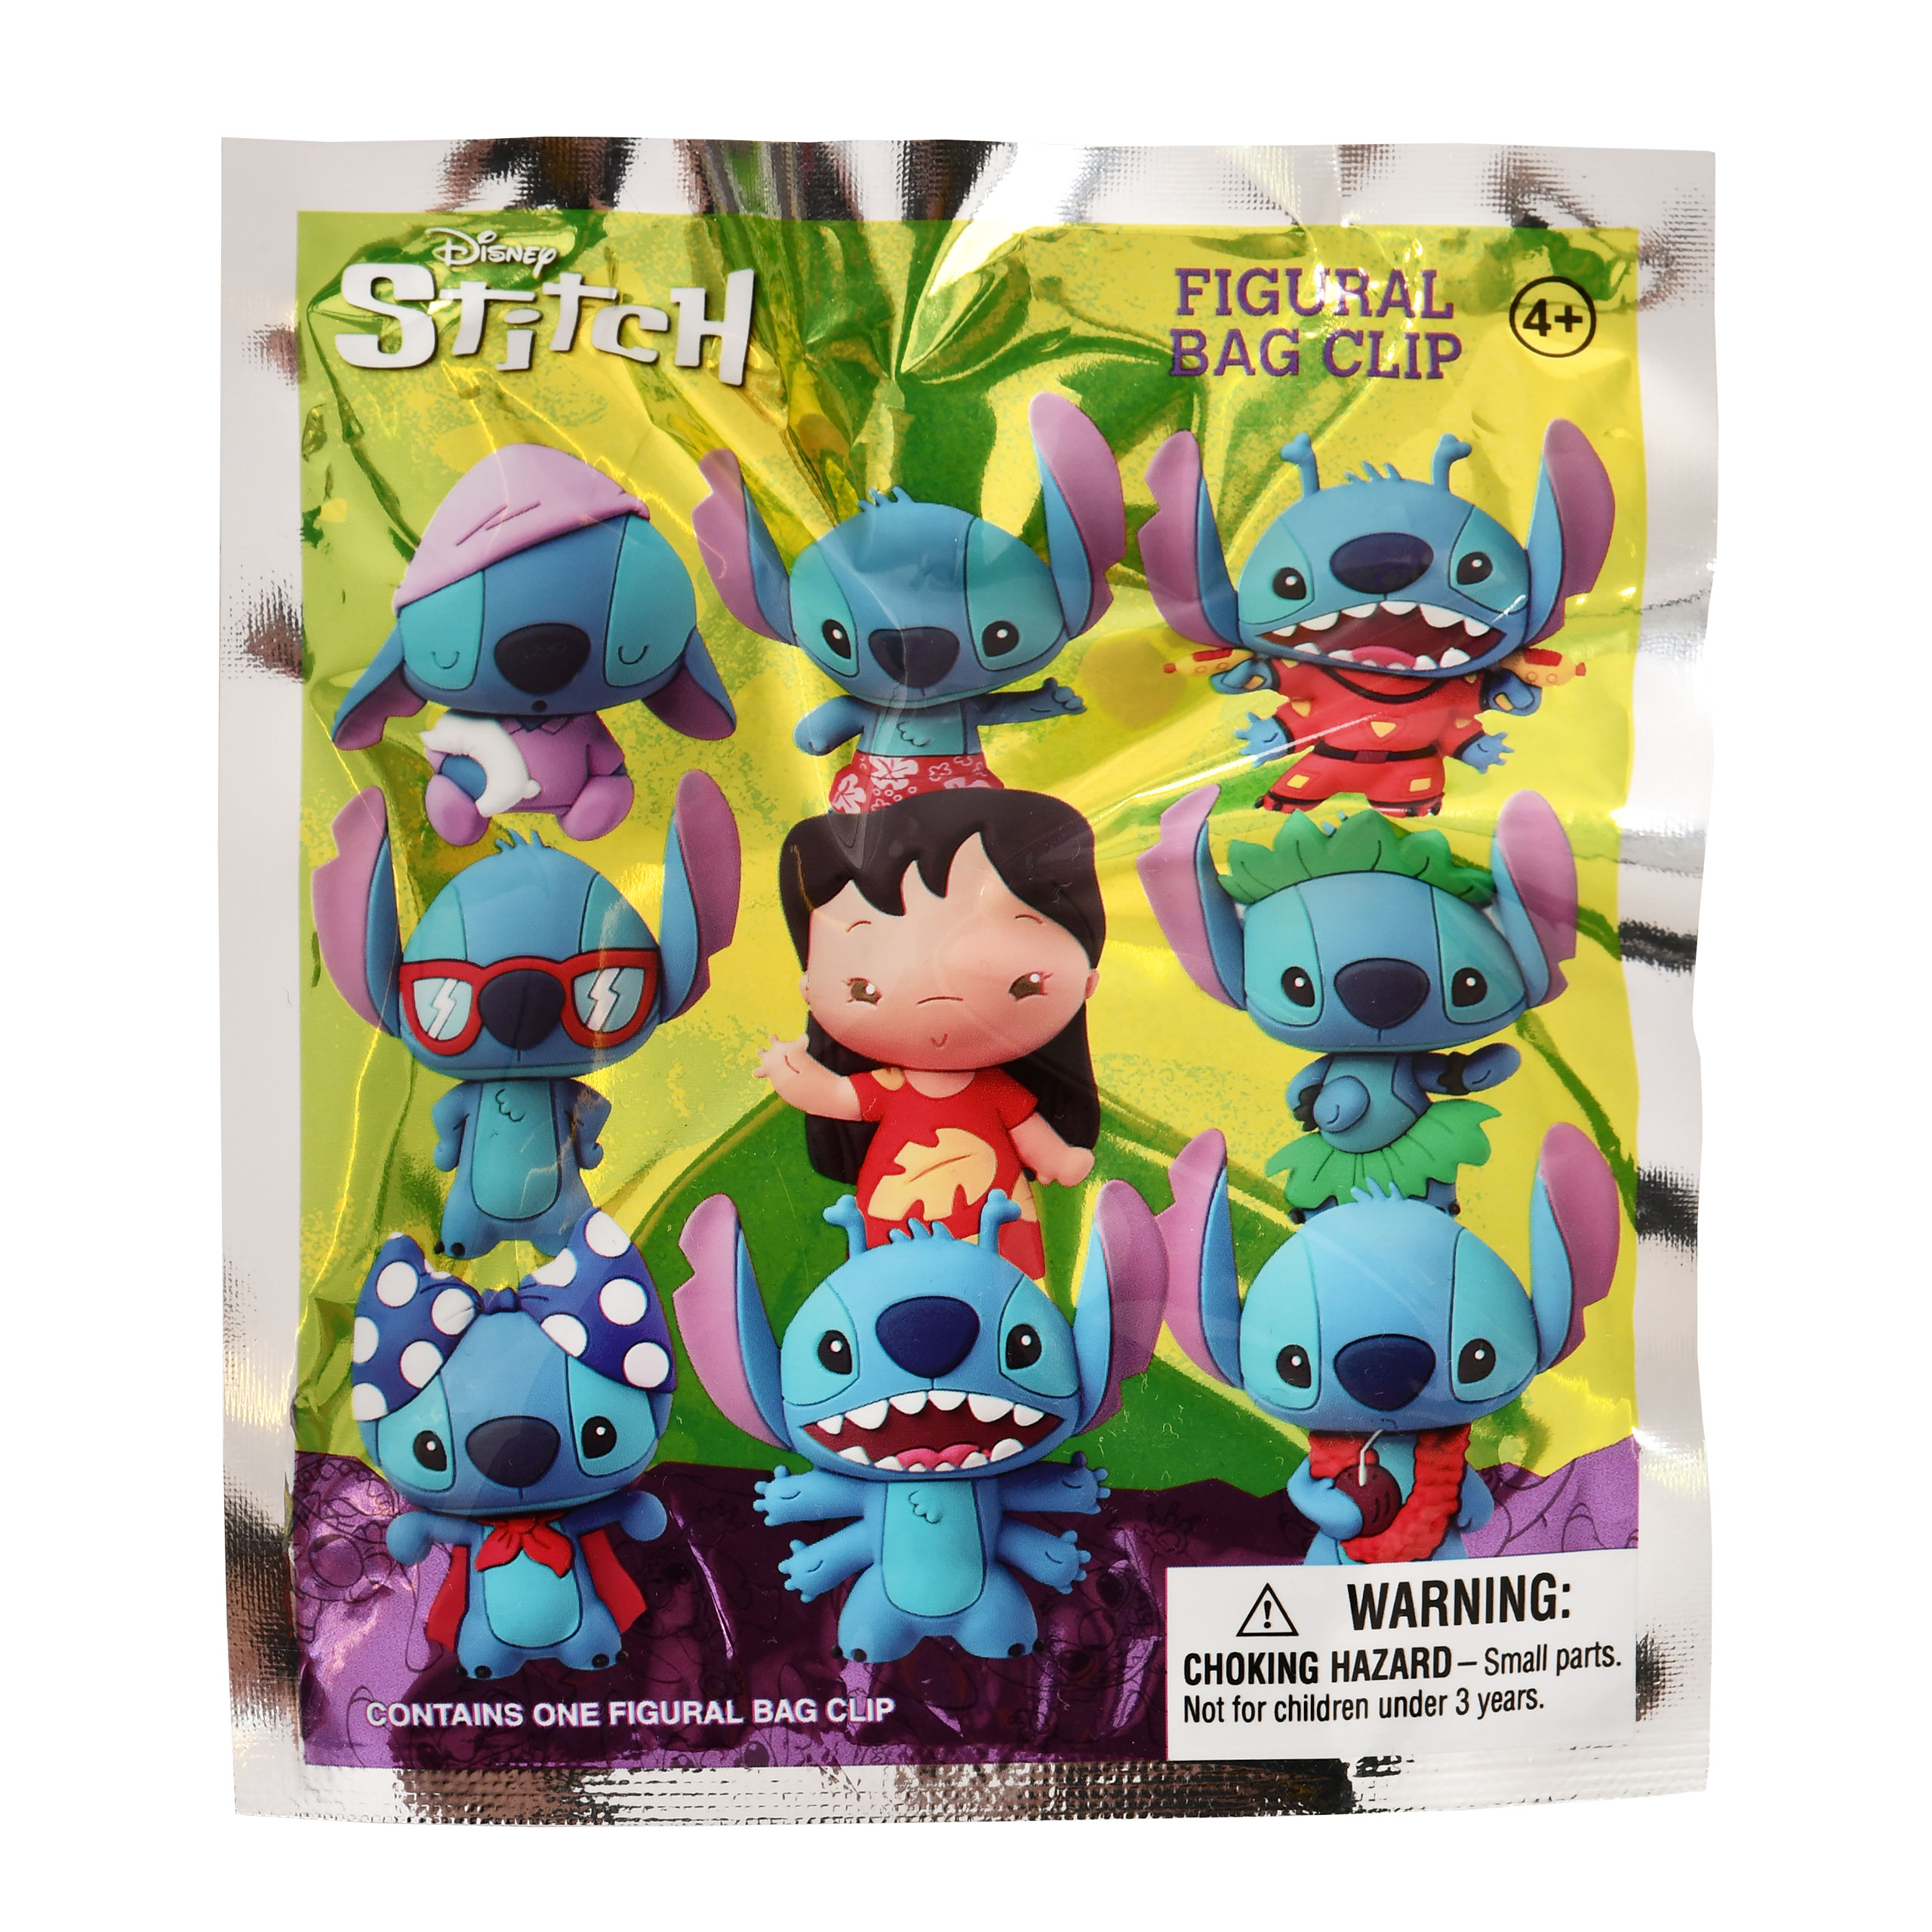 Lilo & Stitch - Mystery Anhänger Series 1